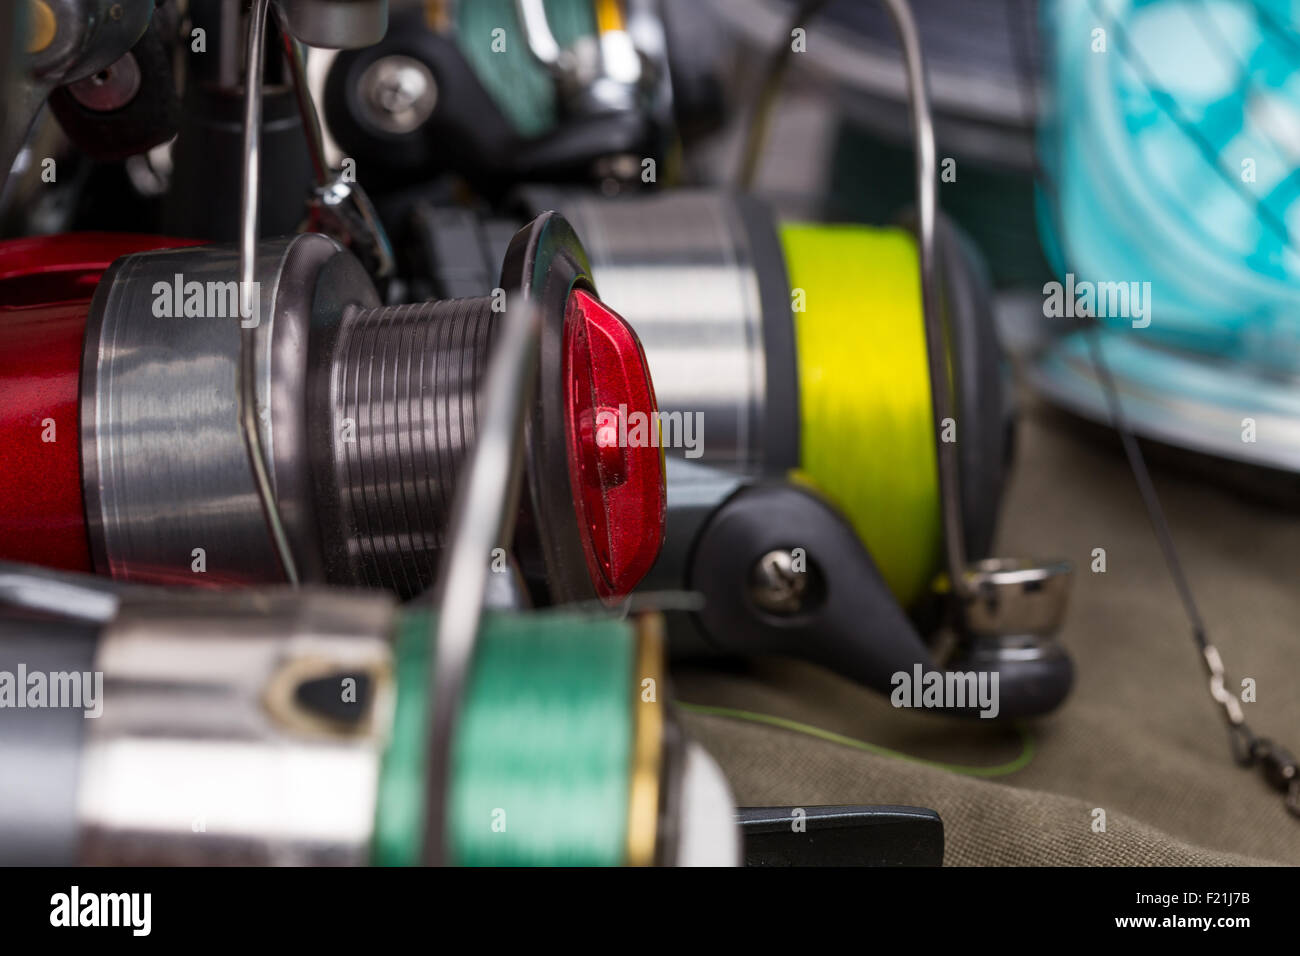 https://c8.alamy.com/comp/F21J7B/fishing-reels-with-line-different-colors-on-cloth-background-F21J7B.jpg